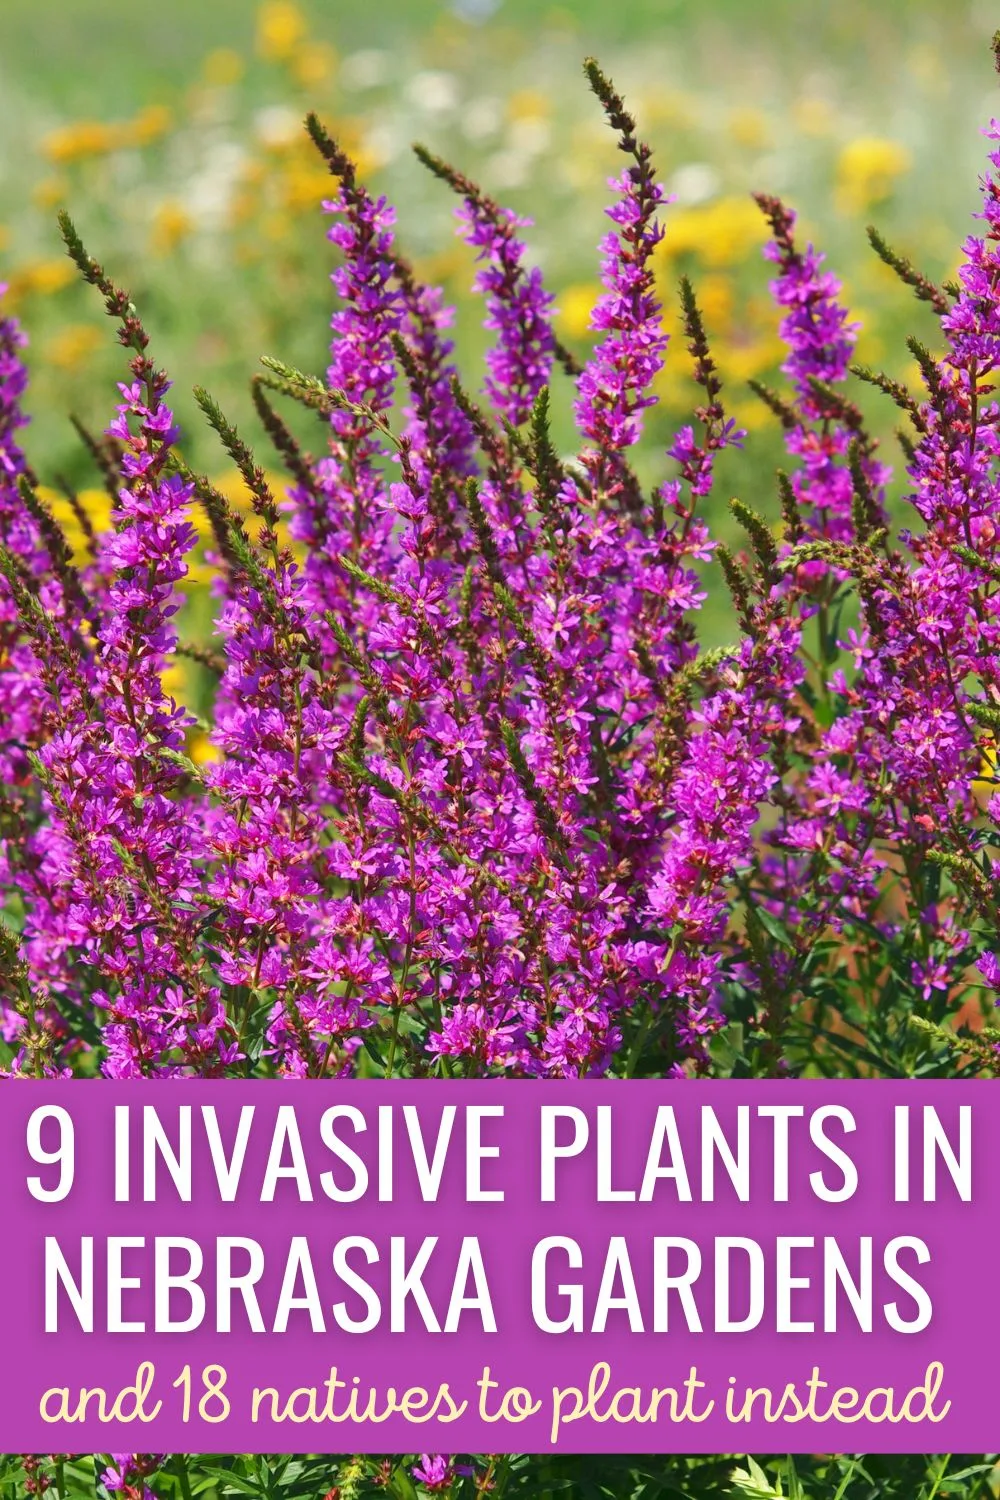 9 Invasive Plants in Nebraska Gardens (and 18 natives to plant instead).